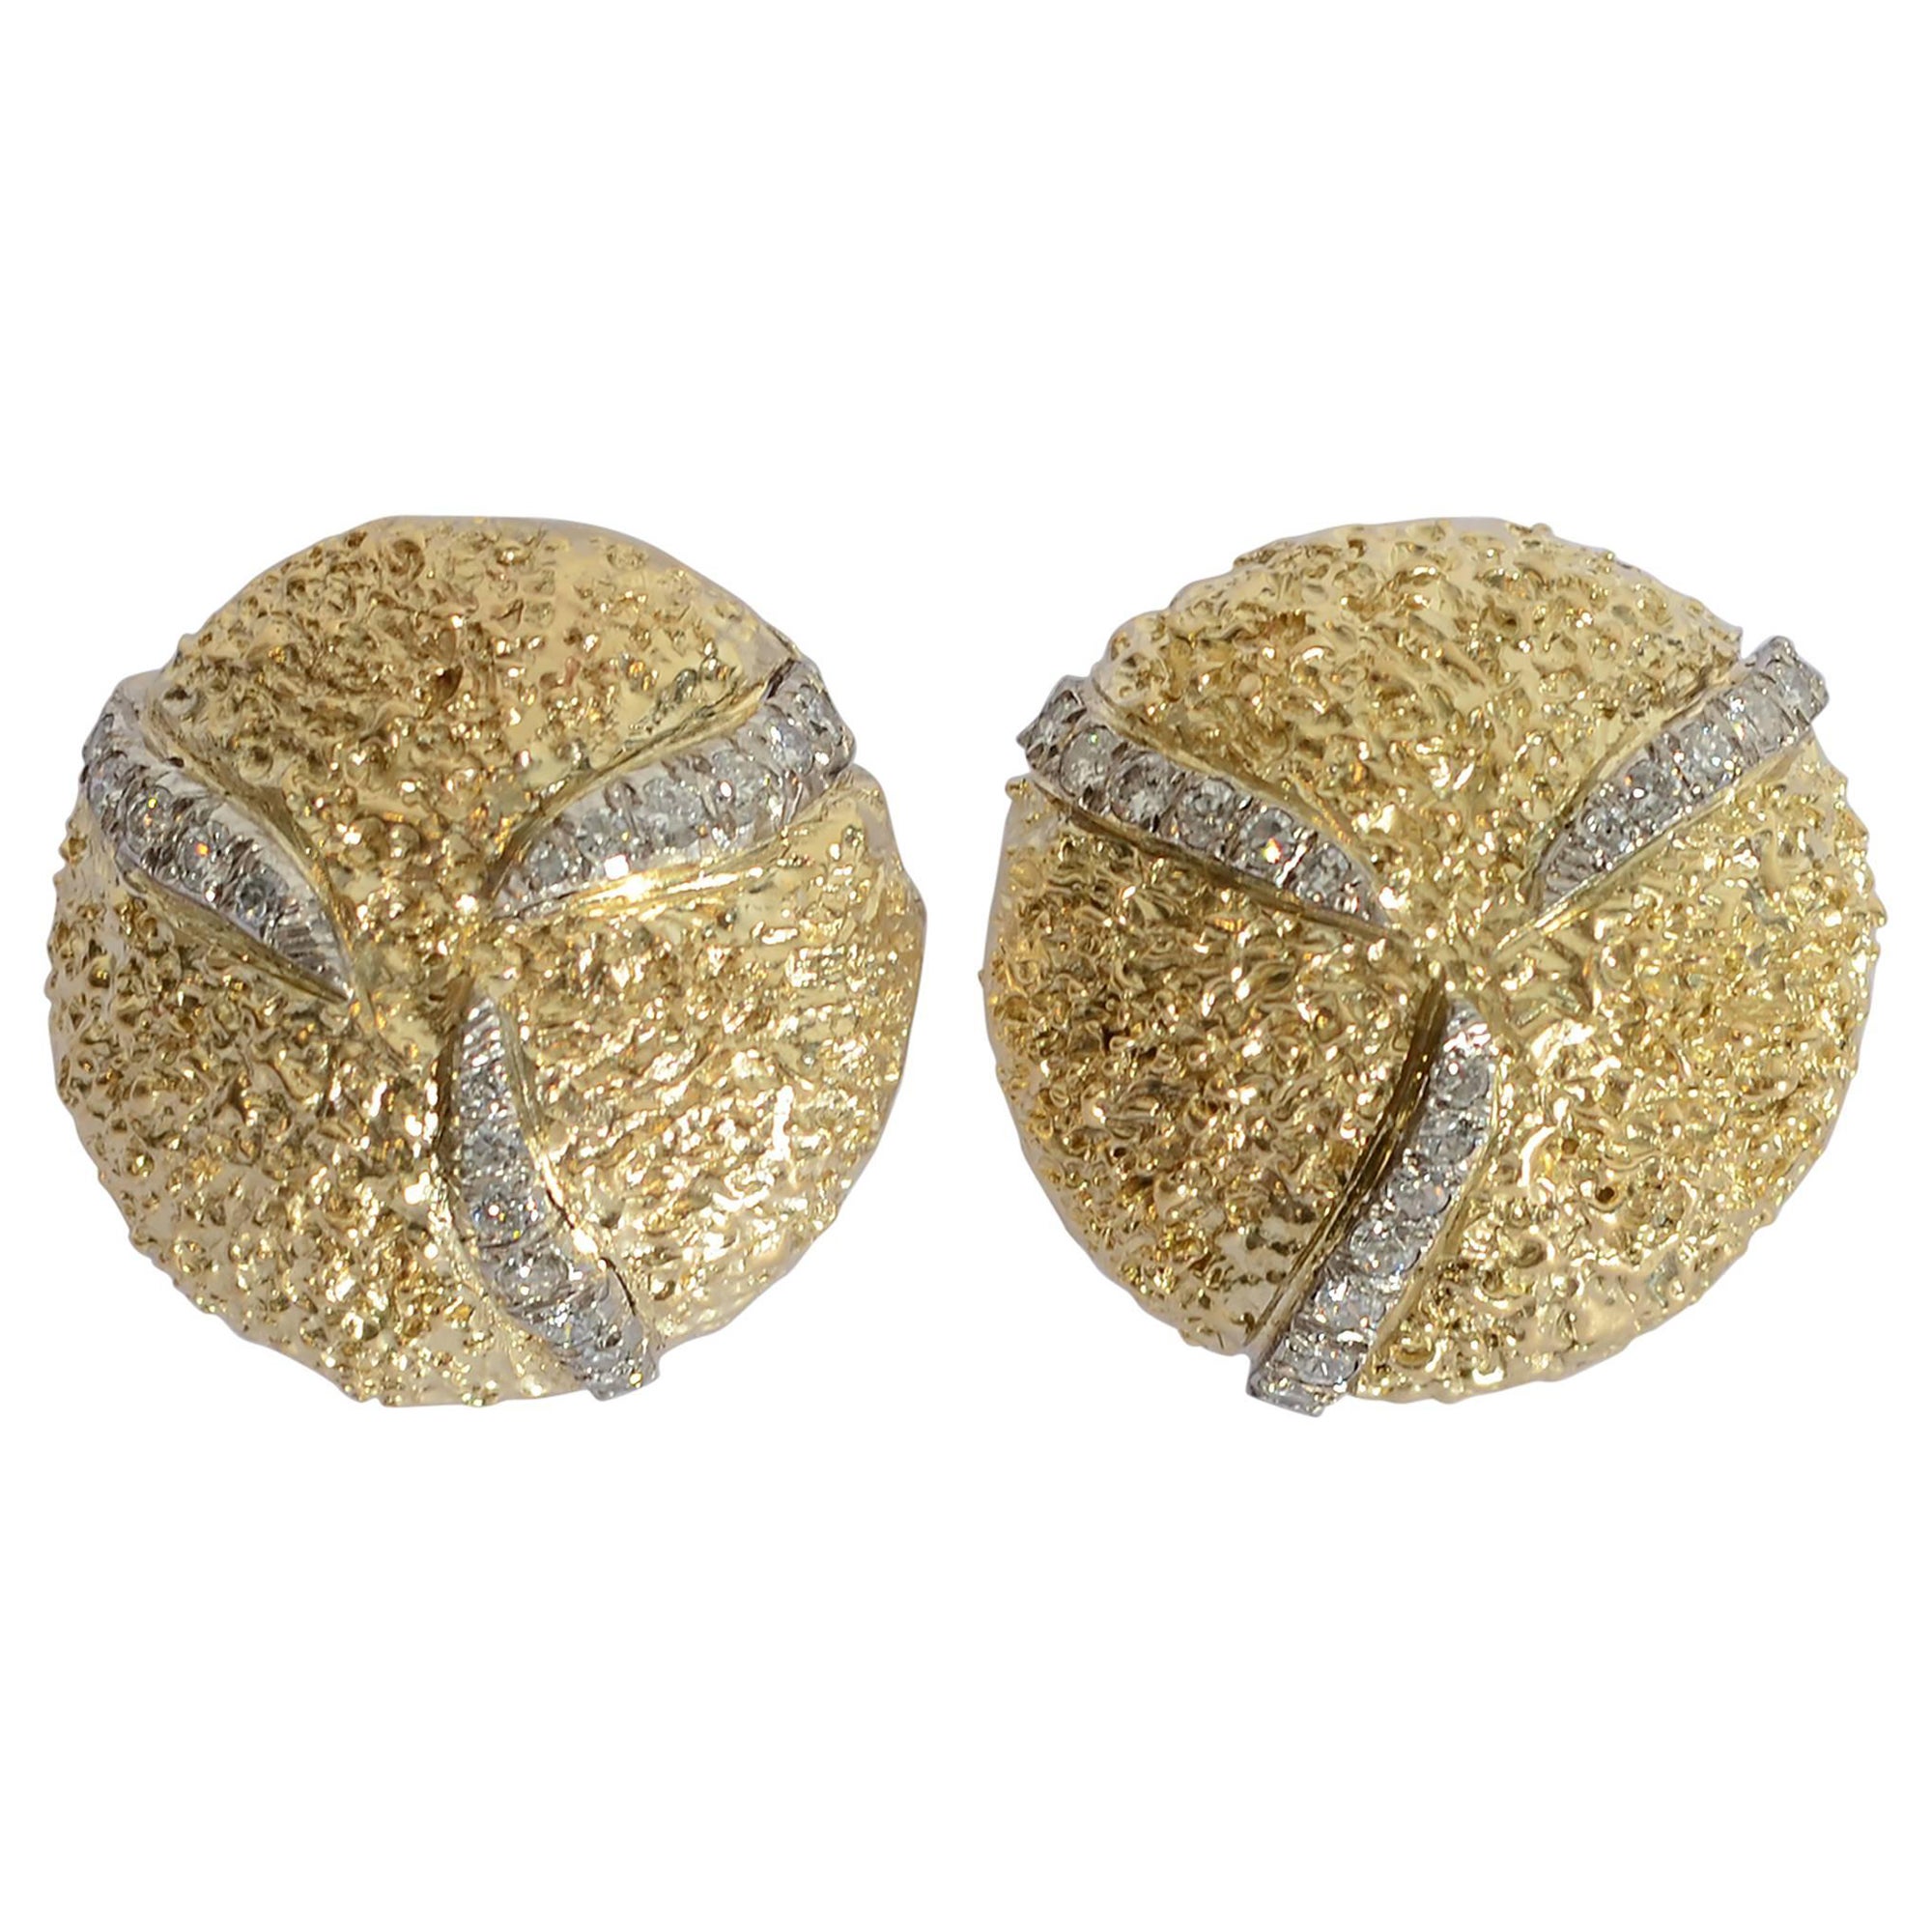 Boris LeBeau Diamond Gold Earrings